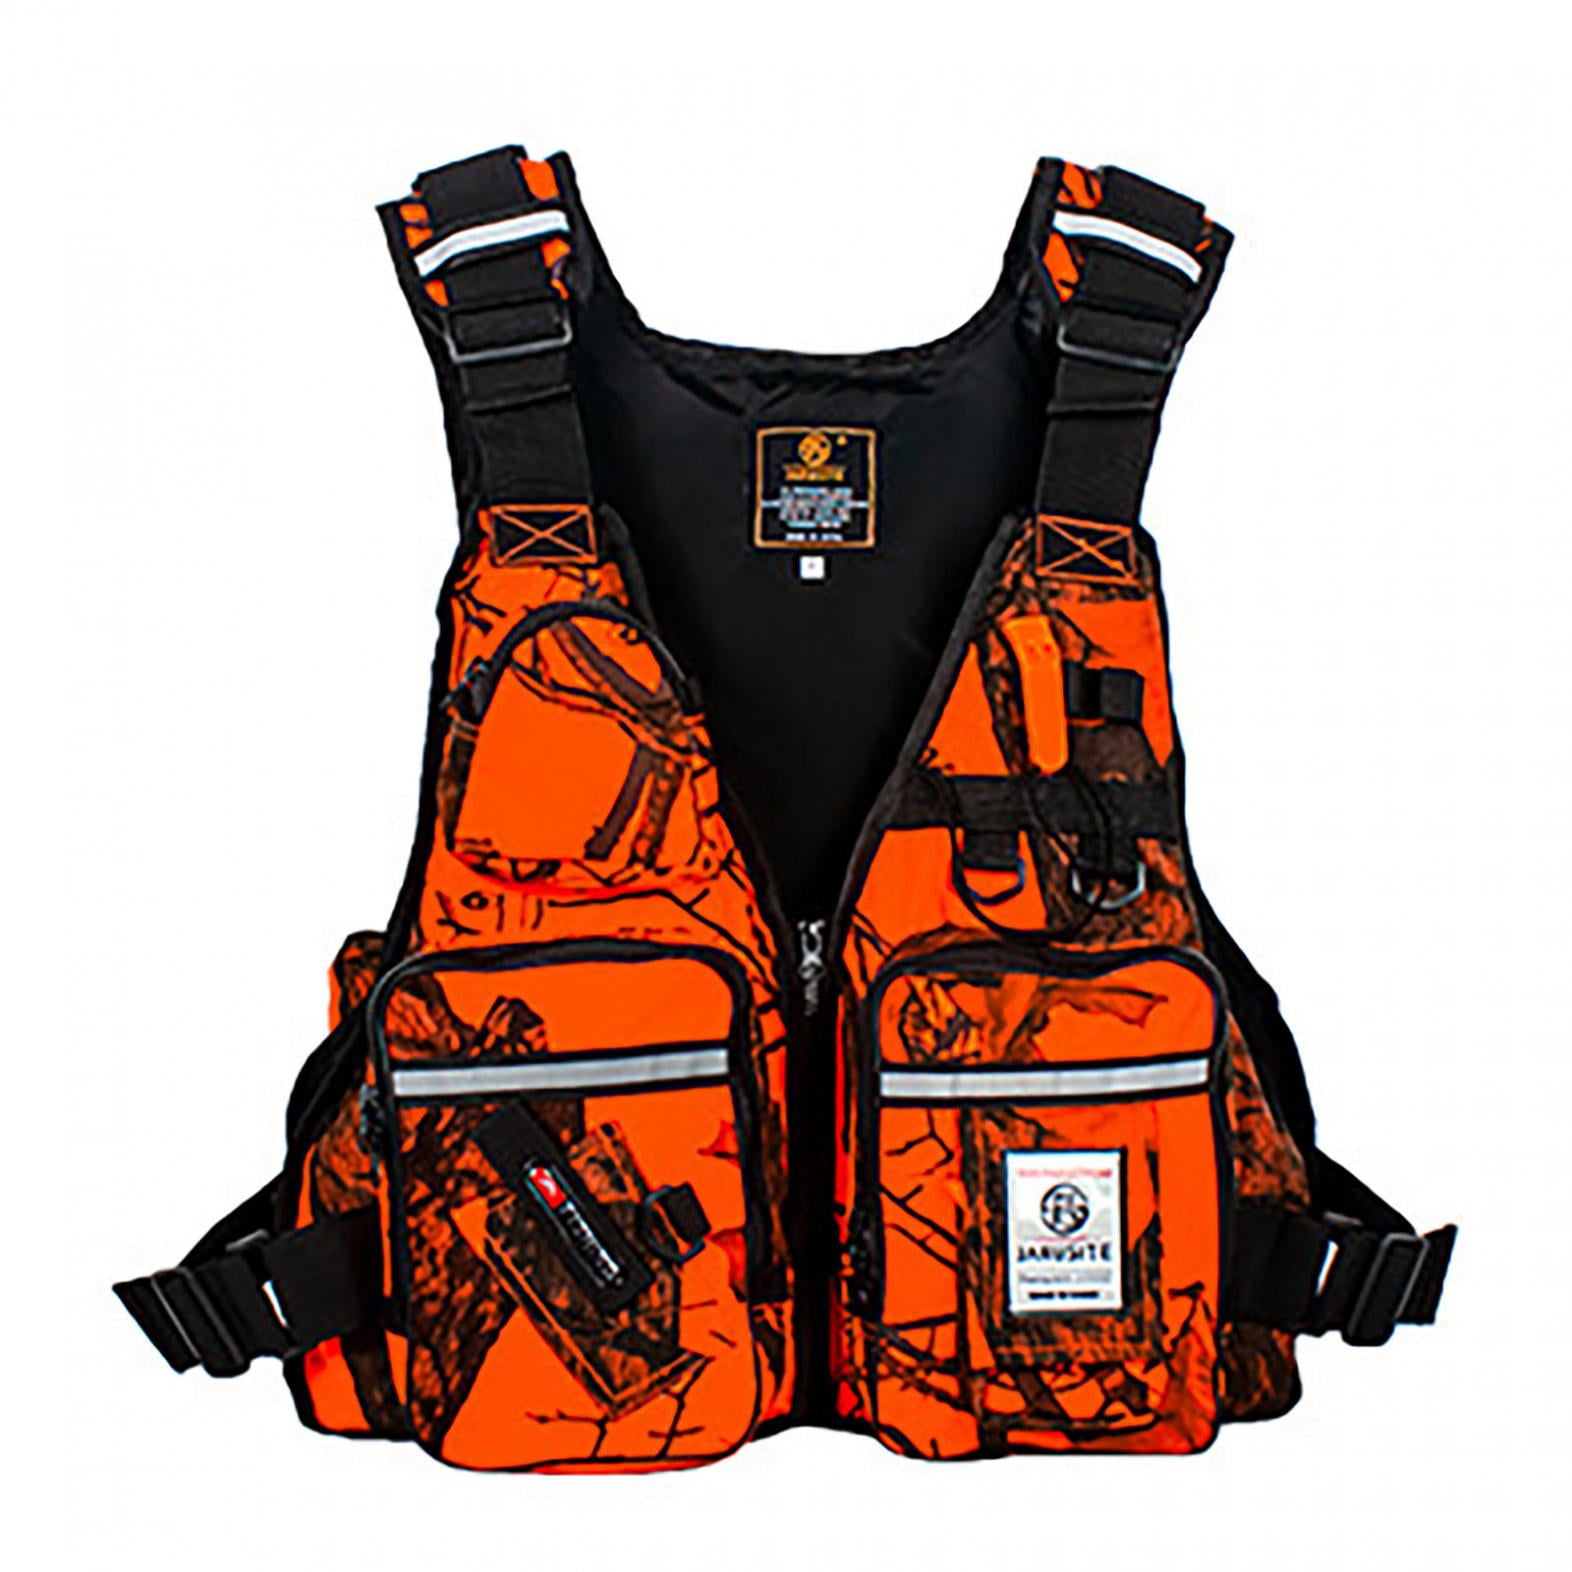 EQWLJWE Multi-Pocket Adult Life Jacket For Outdoor Fishing, Rowing